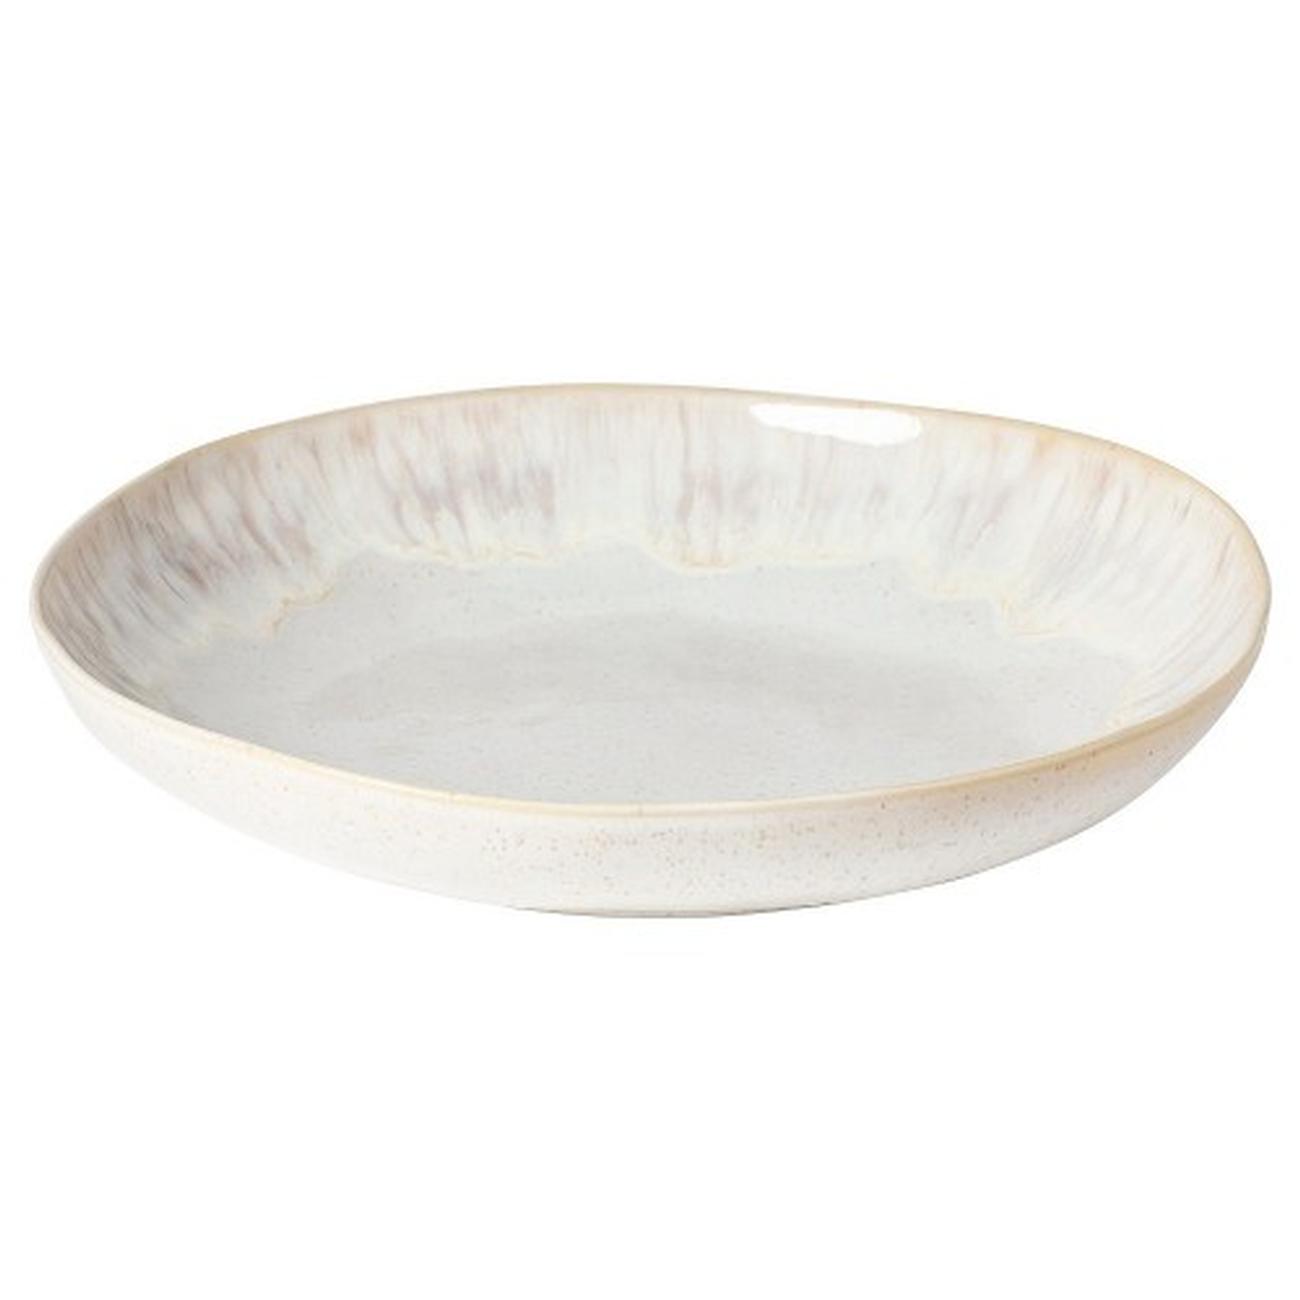 casafina-eivissa-pasta-serving-bowl-37cm-sand-beige - Casafina Eivissa Pasta Serving Bowl-37cm Sand Beige